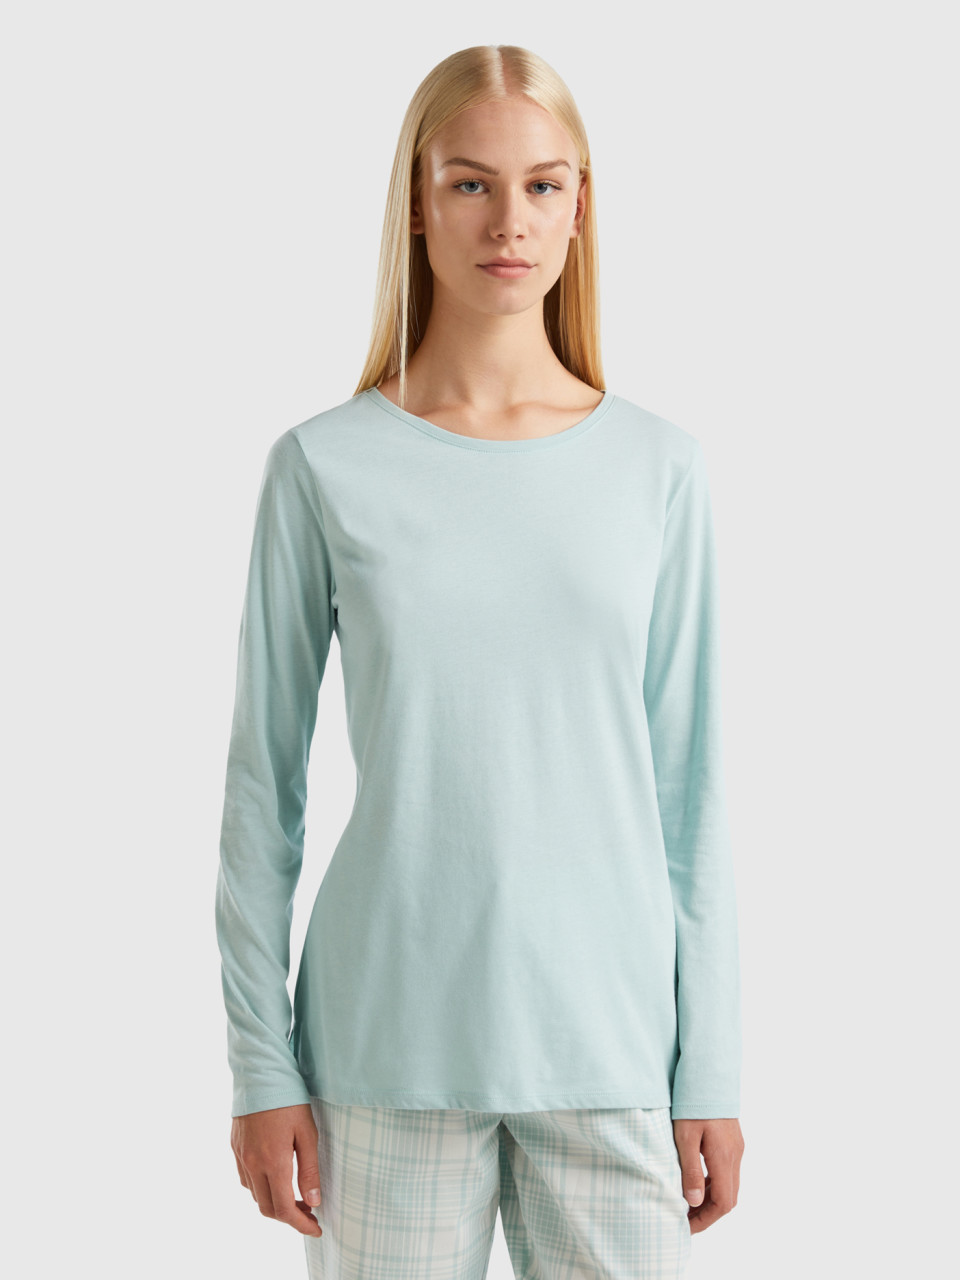 Benetton, Long Fiber Cotton T-shirt, Aqua, Women